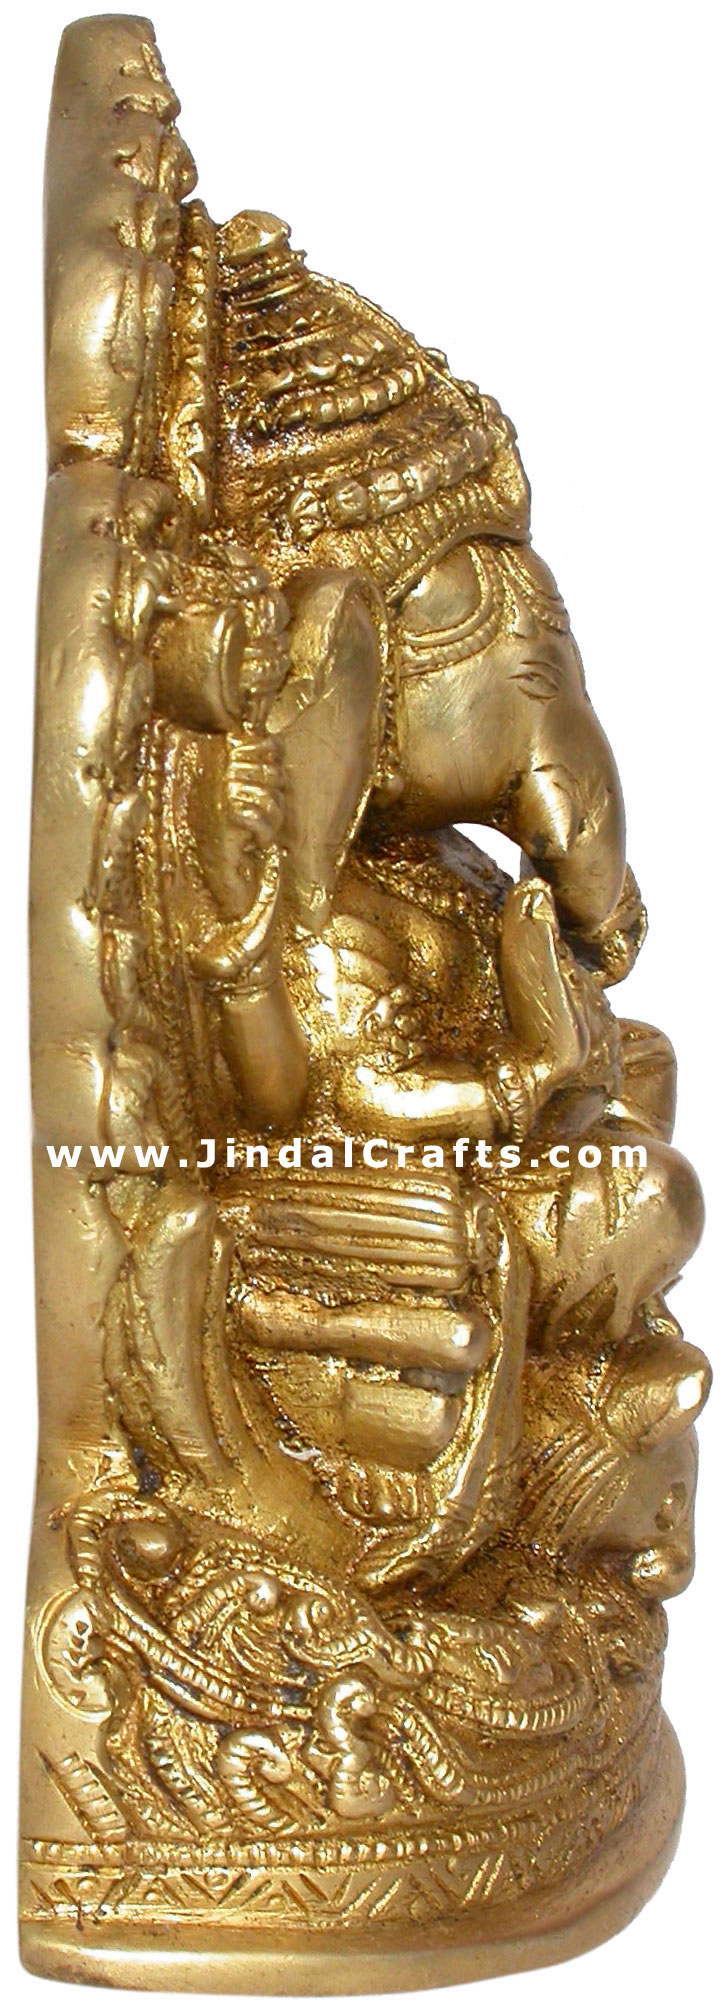 Hindu Lord Ganesha Handmade Religious Sculpture India